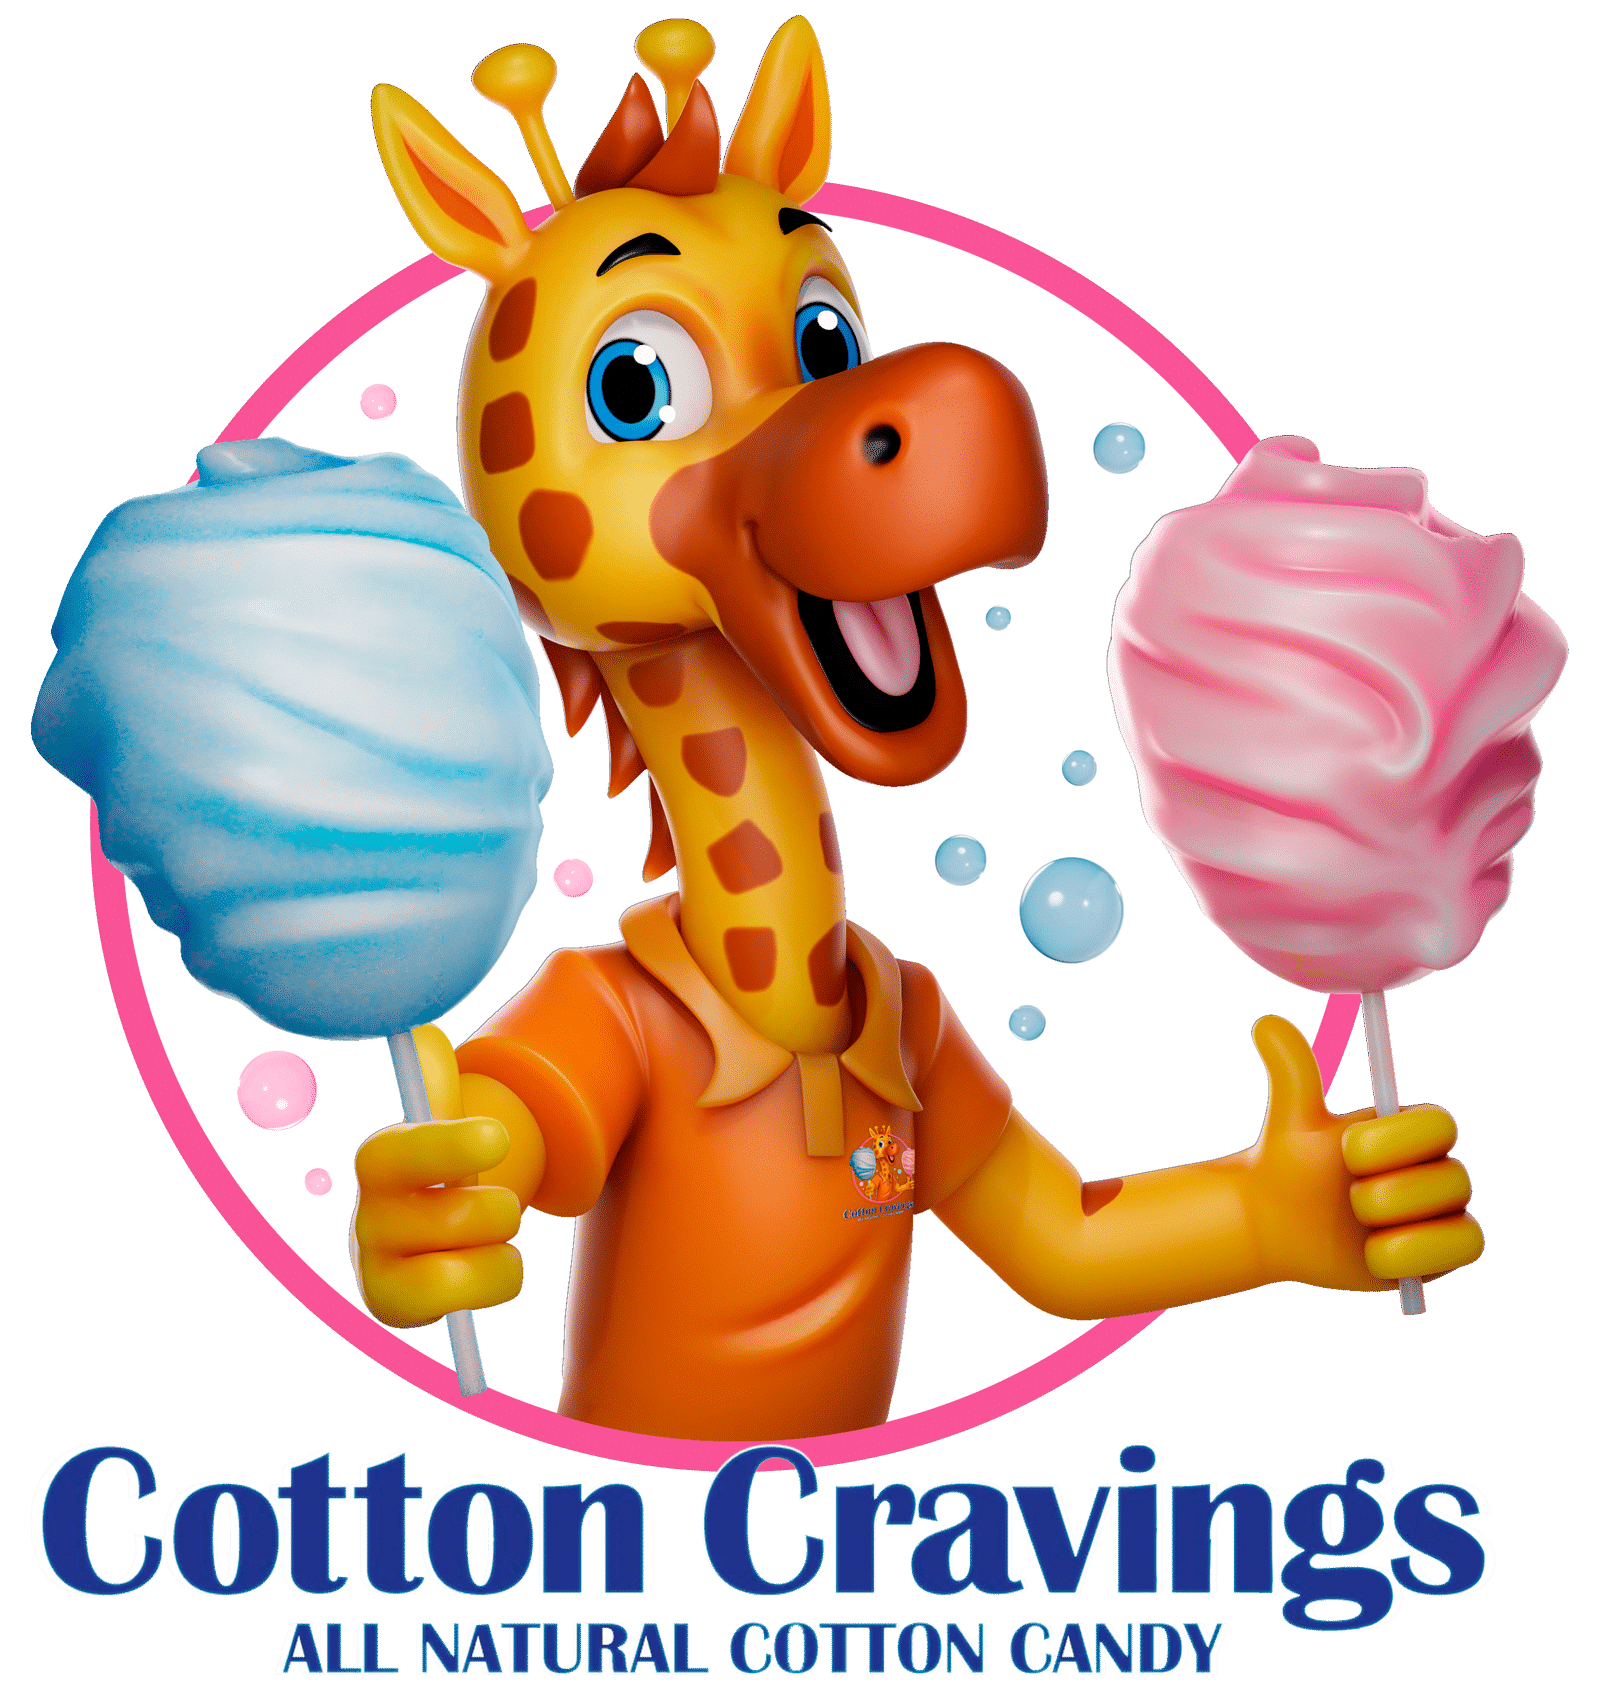 Amazing Cotton Candy Flavors! - Cotton Cravings